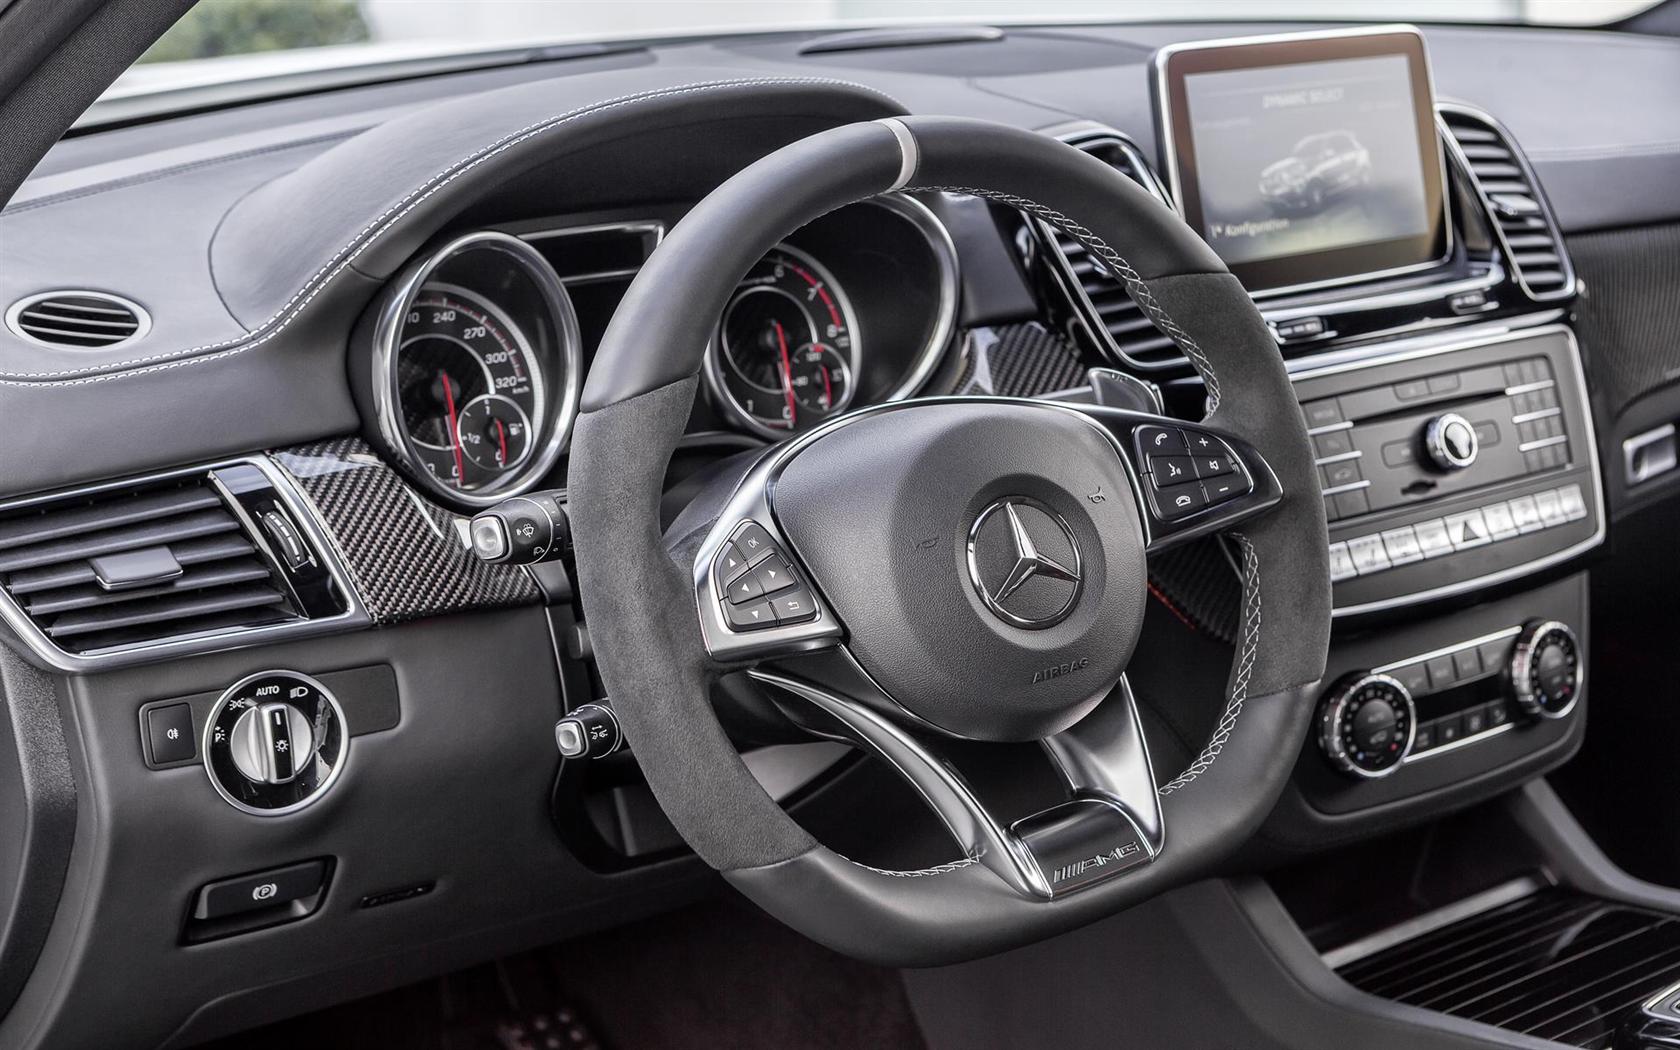 2016 Mercedes-Benz GLE